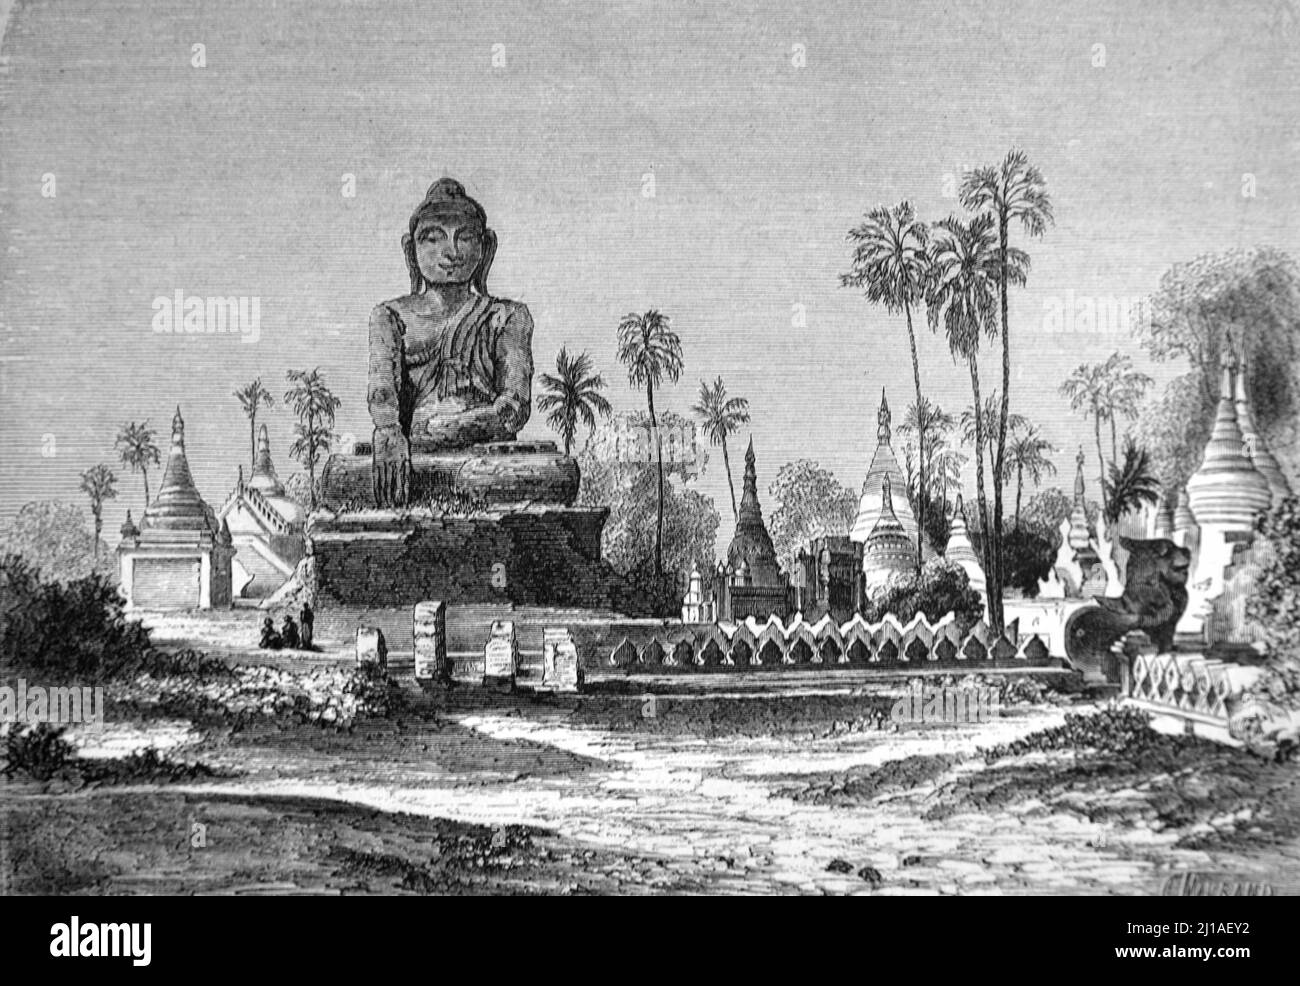 Riesiger Buddha der Kuthodaw Pagod Amarapura Mandalay Burma oder Myanmar. Illustration oder Gravur 1860. Stockfoto